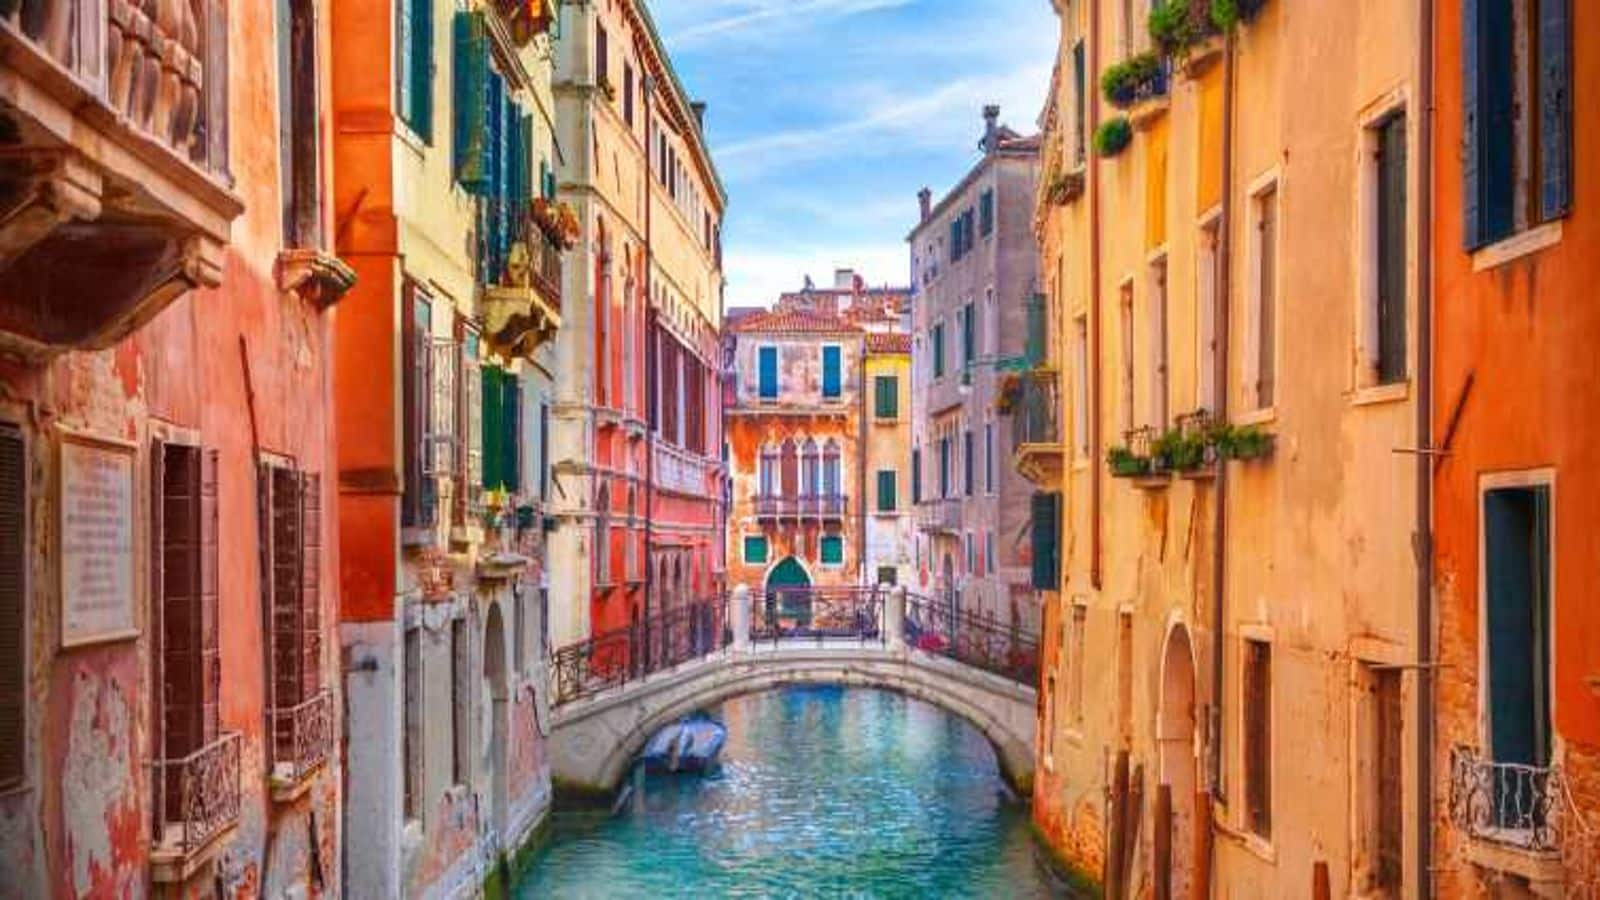 Explore Venice's hidden alleys and courtyards